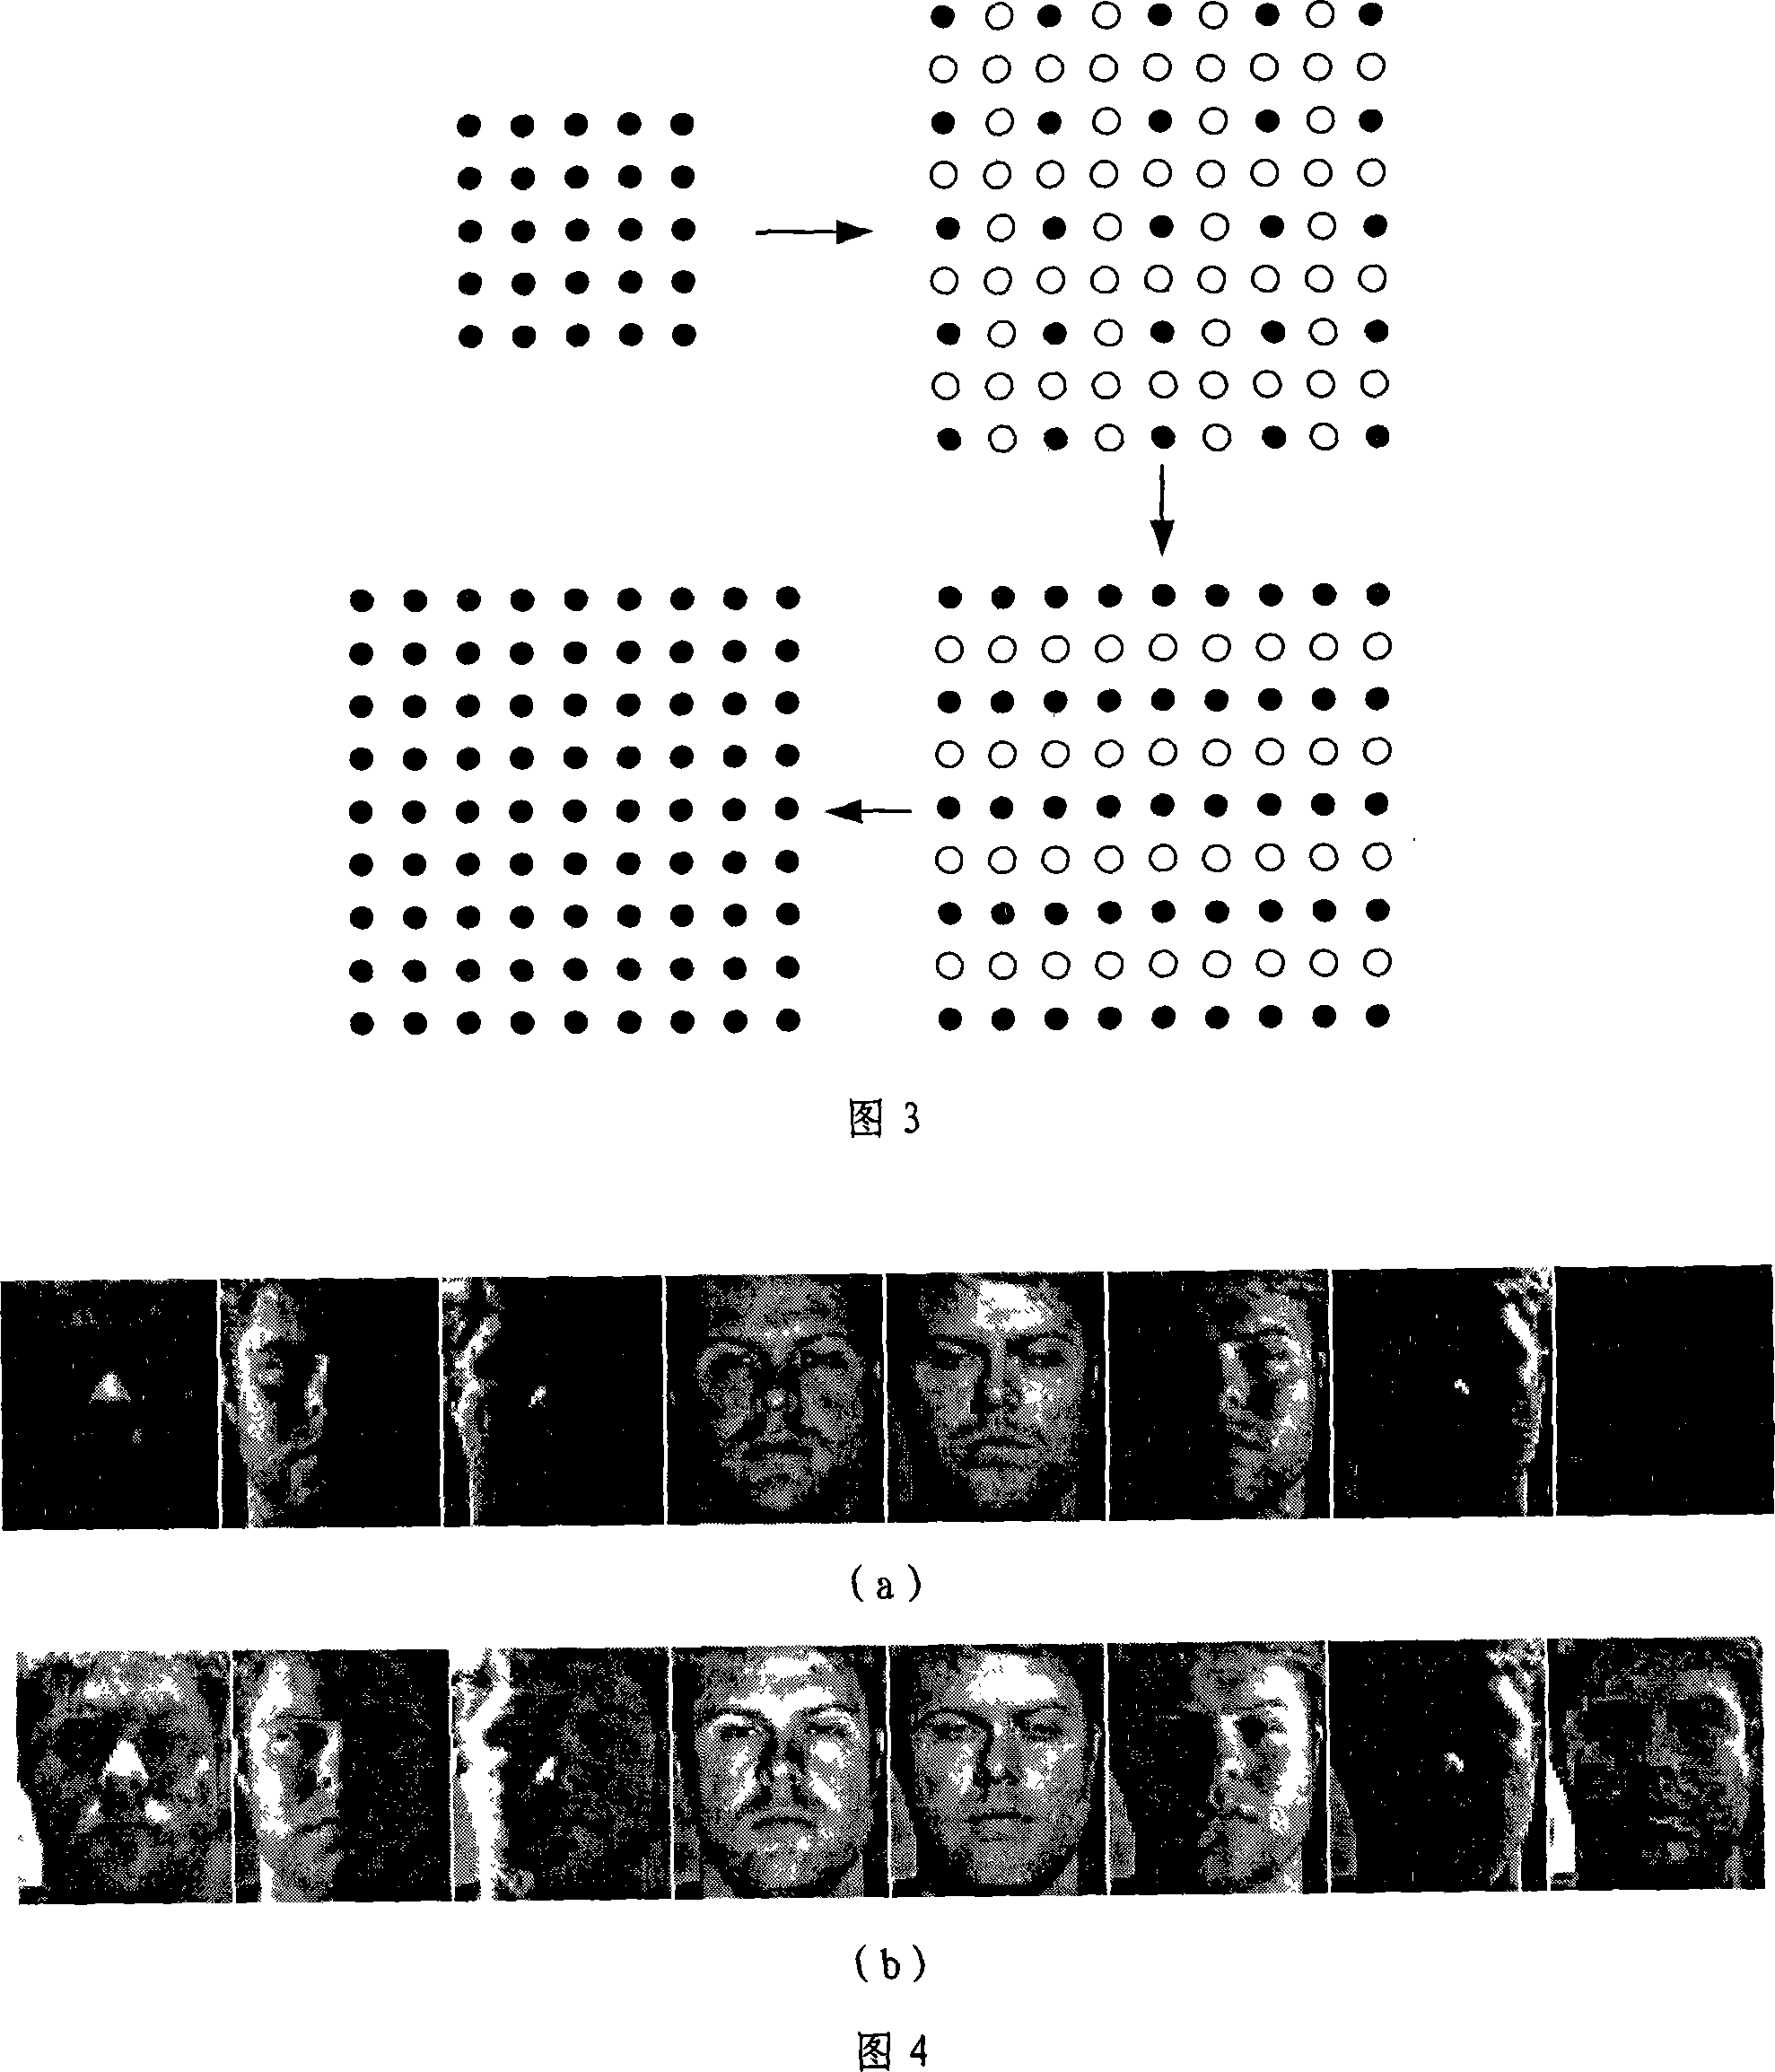 Method for regulating human face image illumination based on multilevel wavelet disintegrating and spline interpolation